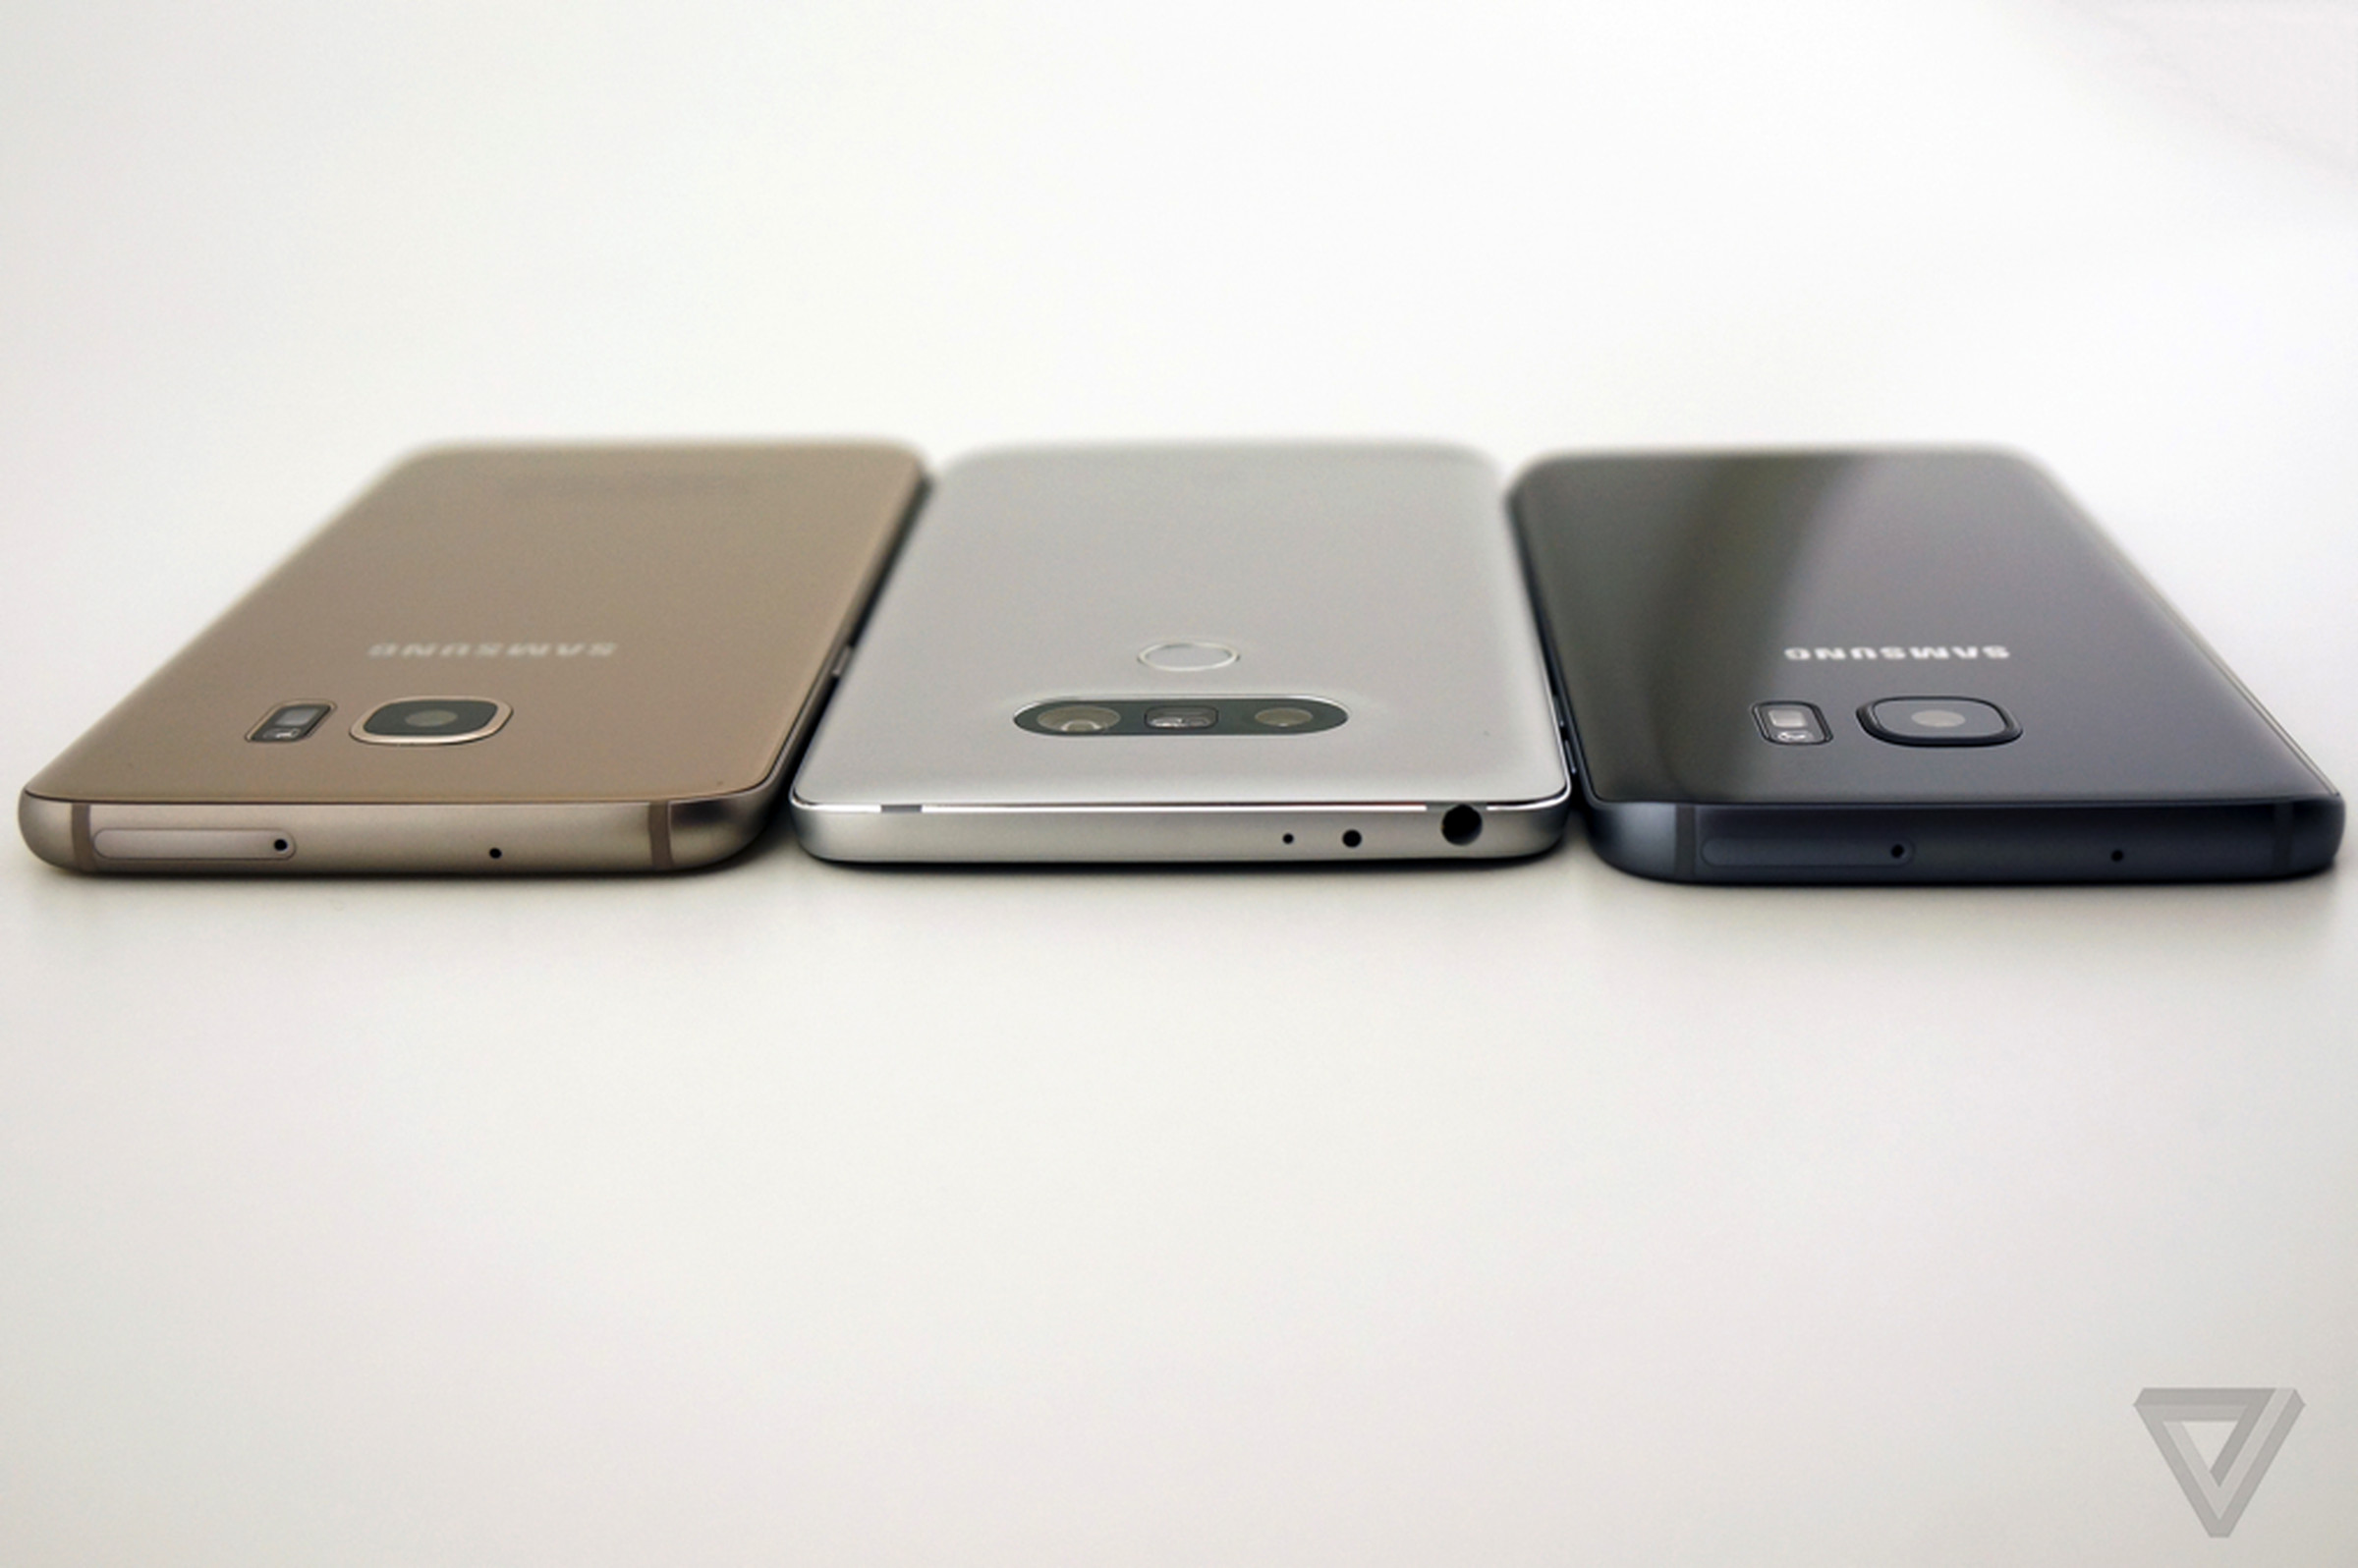 Samsung Galaxy S7 and S7 Edge vs. LG G5 hands-on photos